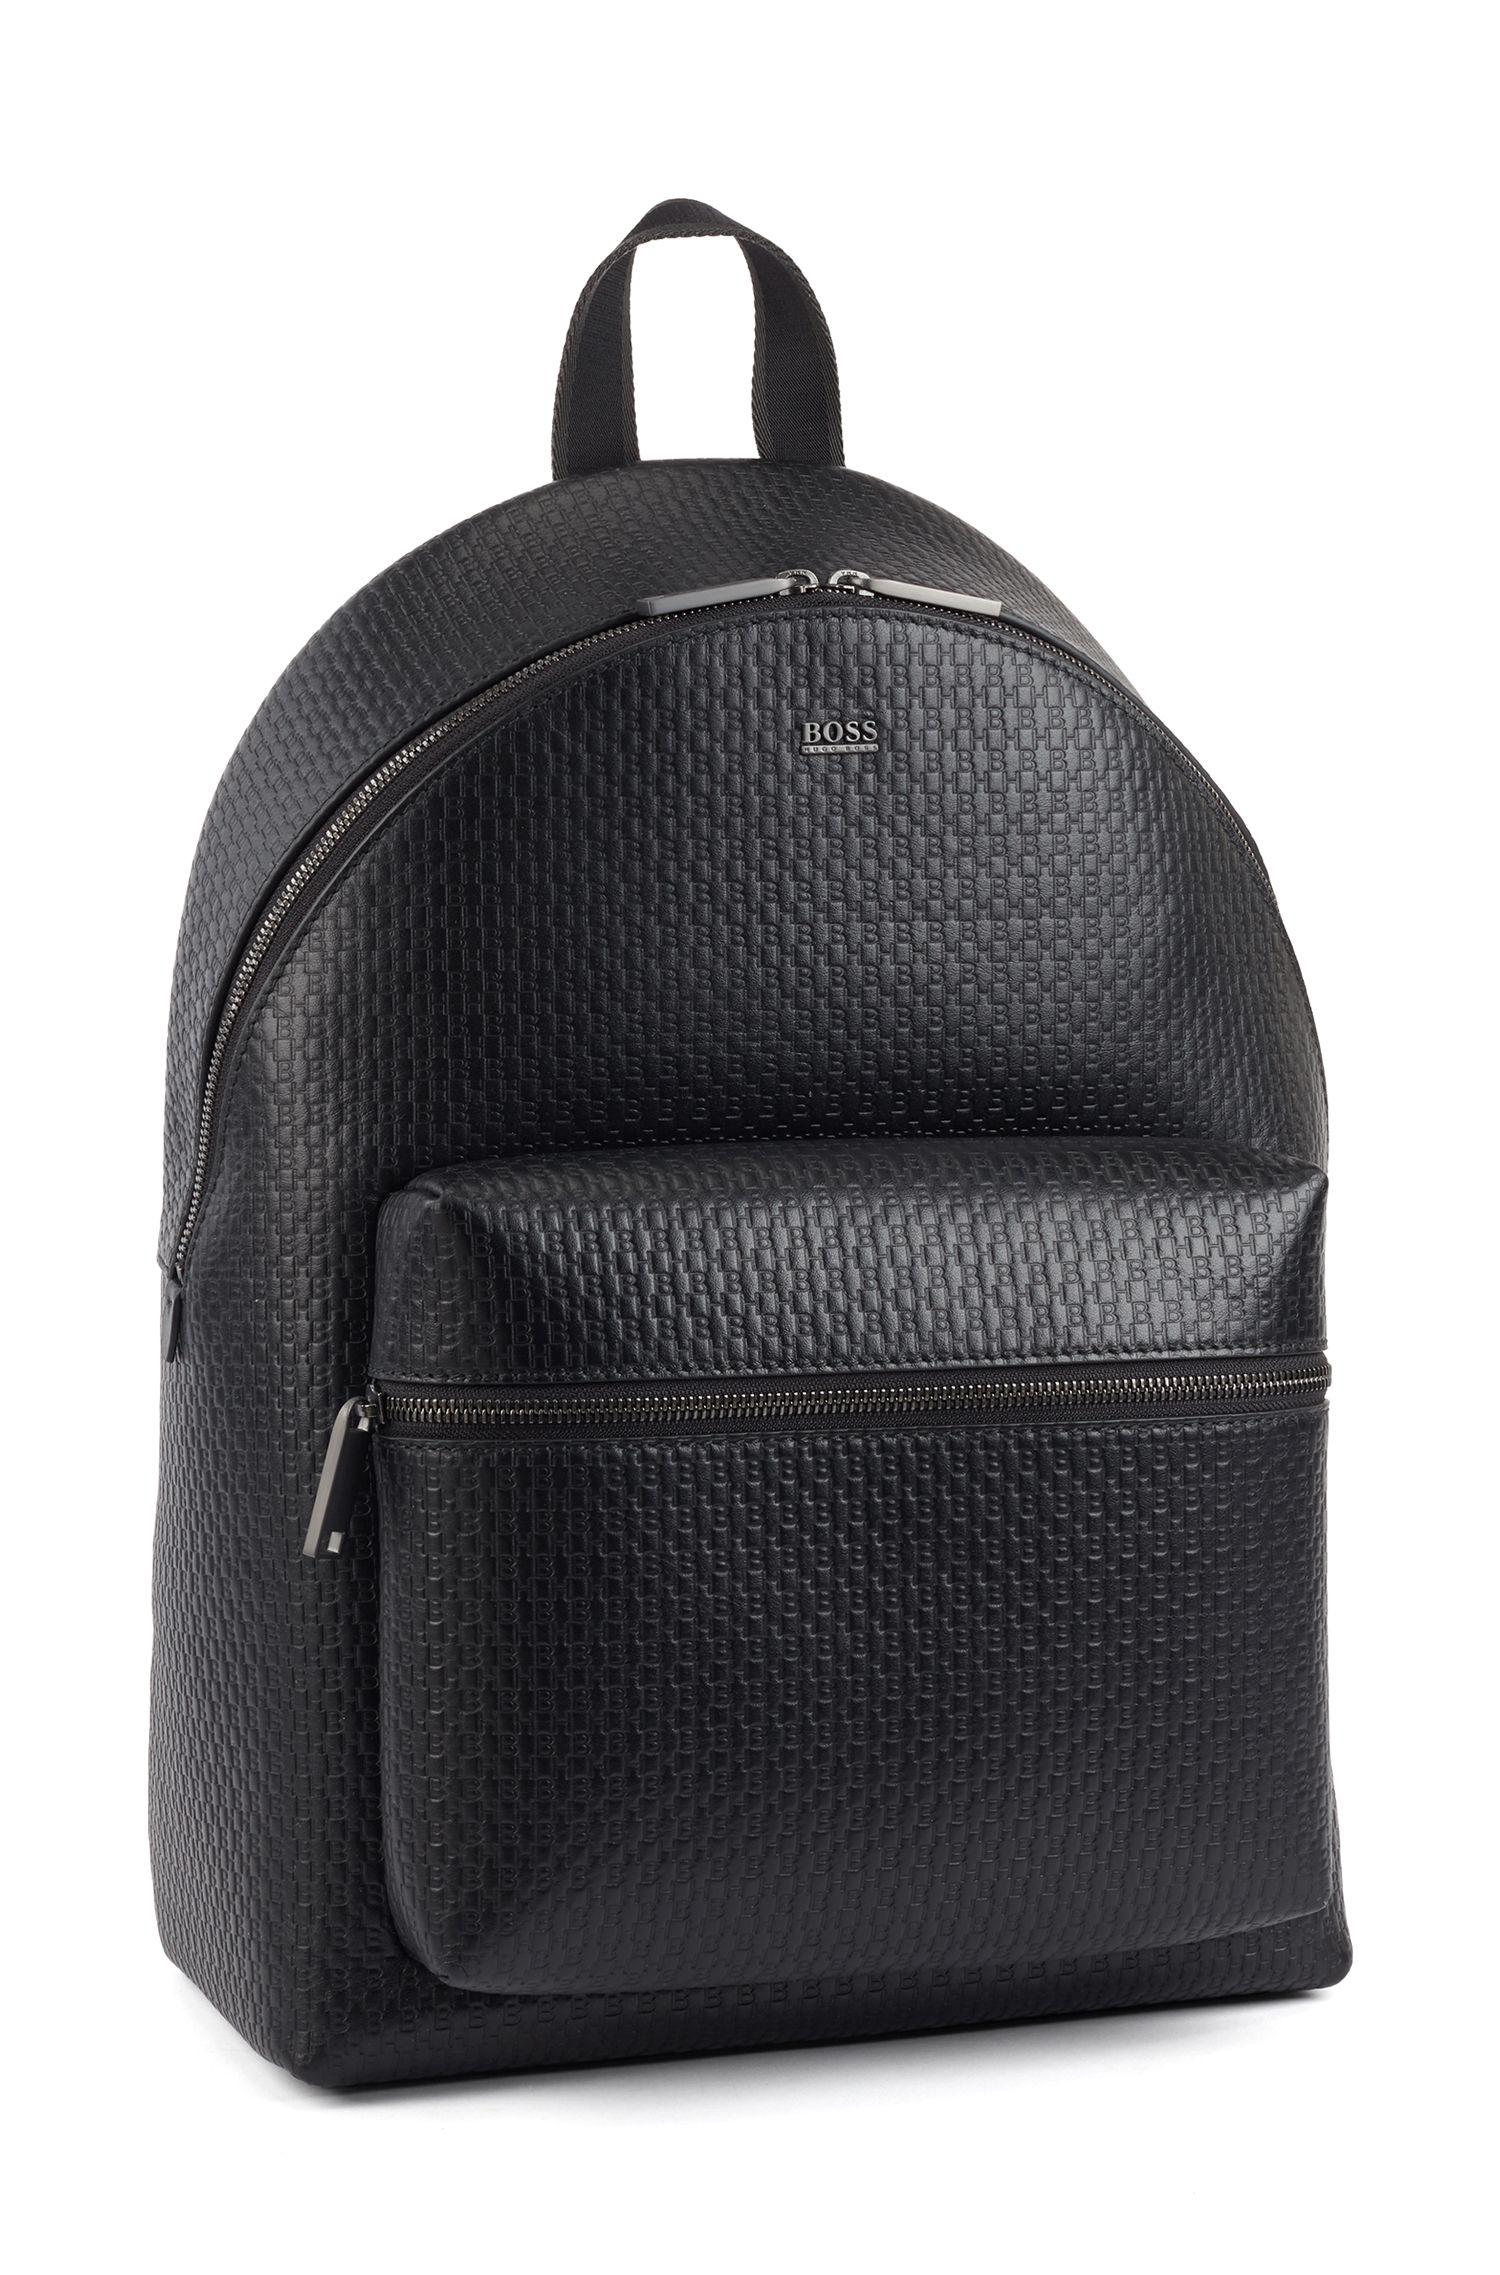 BOSS Backpack In Monogram-printed Italian Leather in Black for Men - Lyst